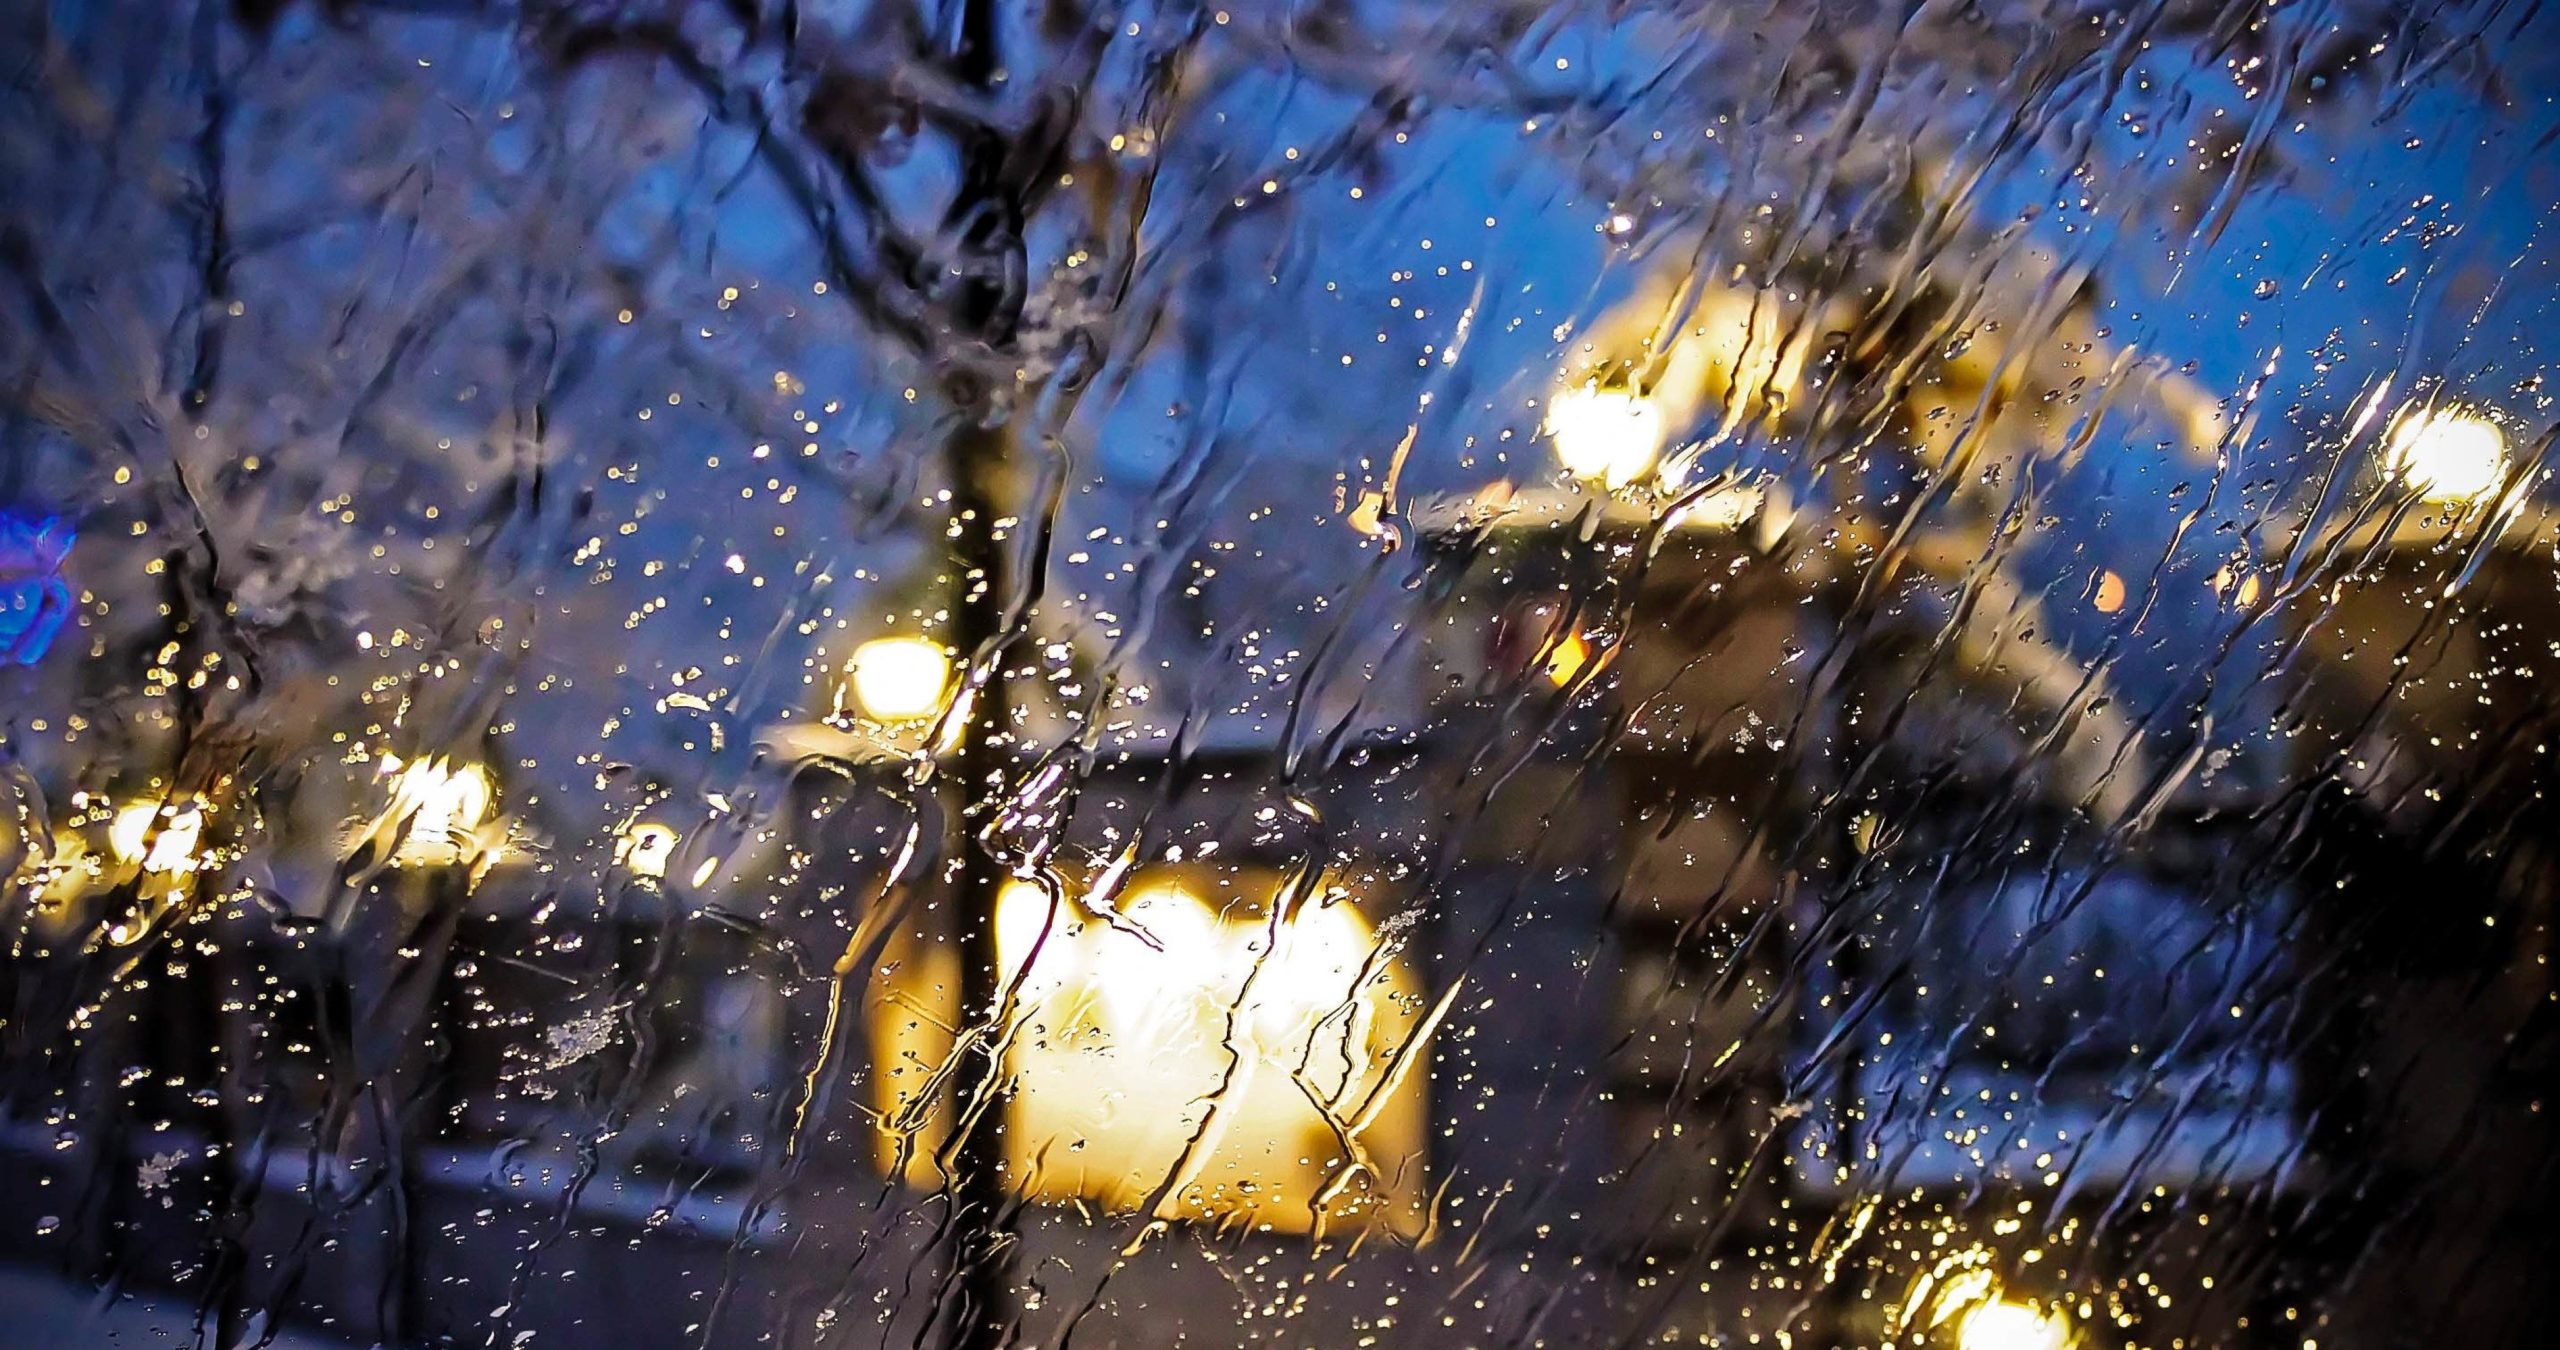 raining images